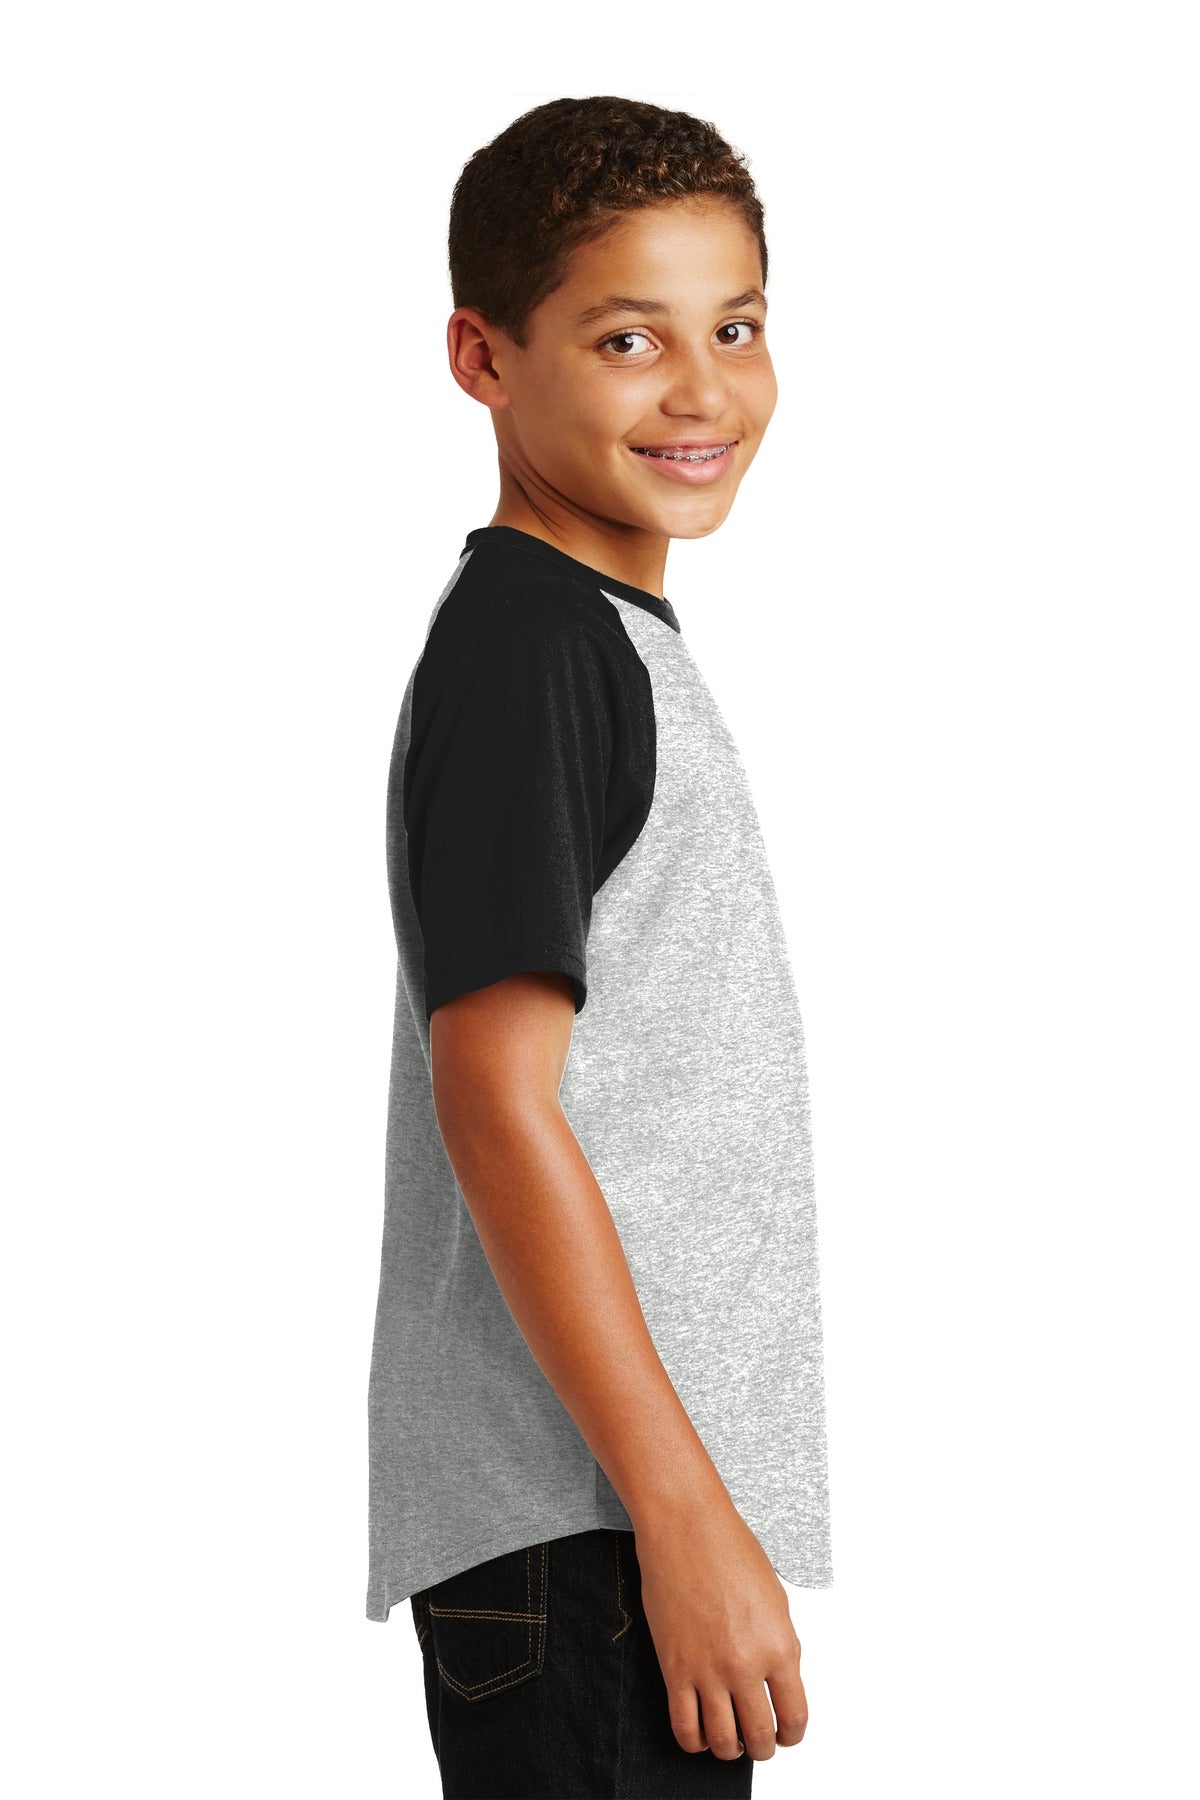 Sport-Tek® Youth Short Sleeve Colorblock Raglan Jersey. YT201 - DFW Impression